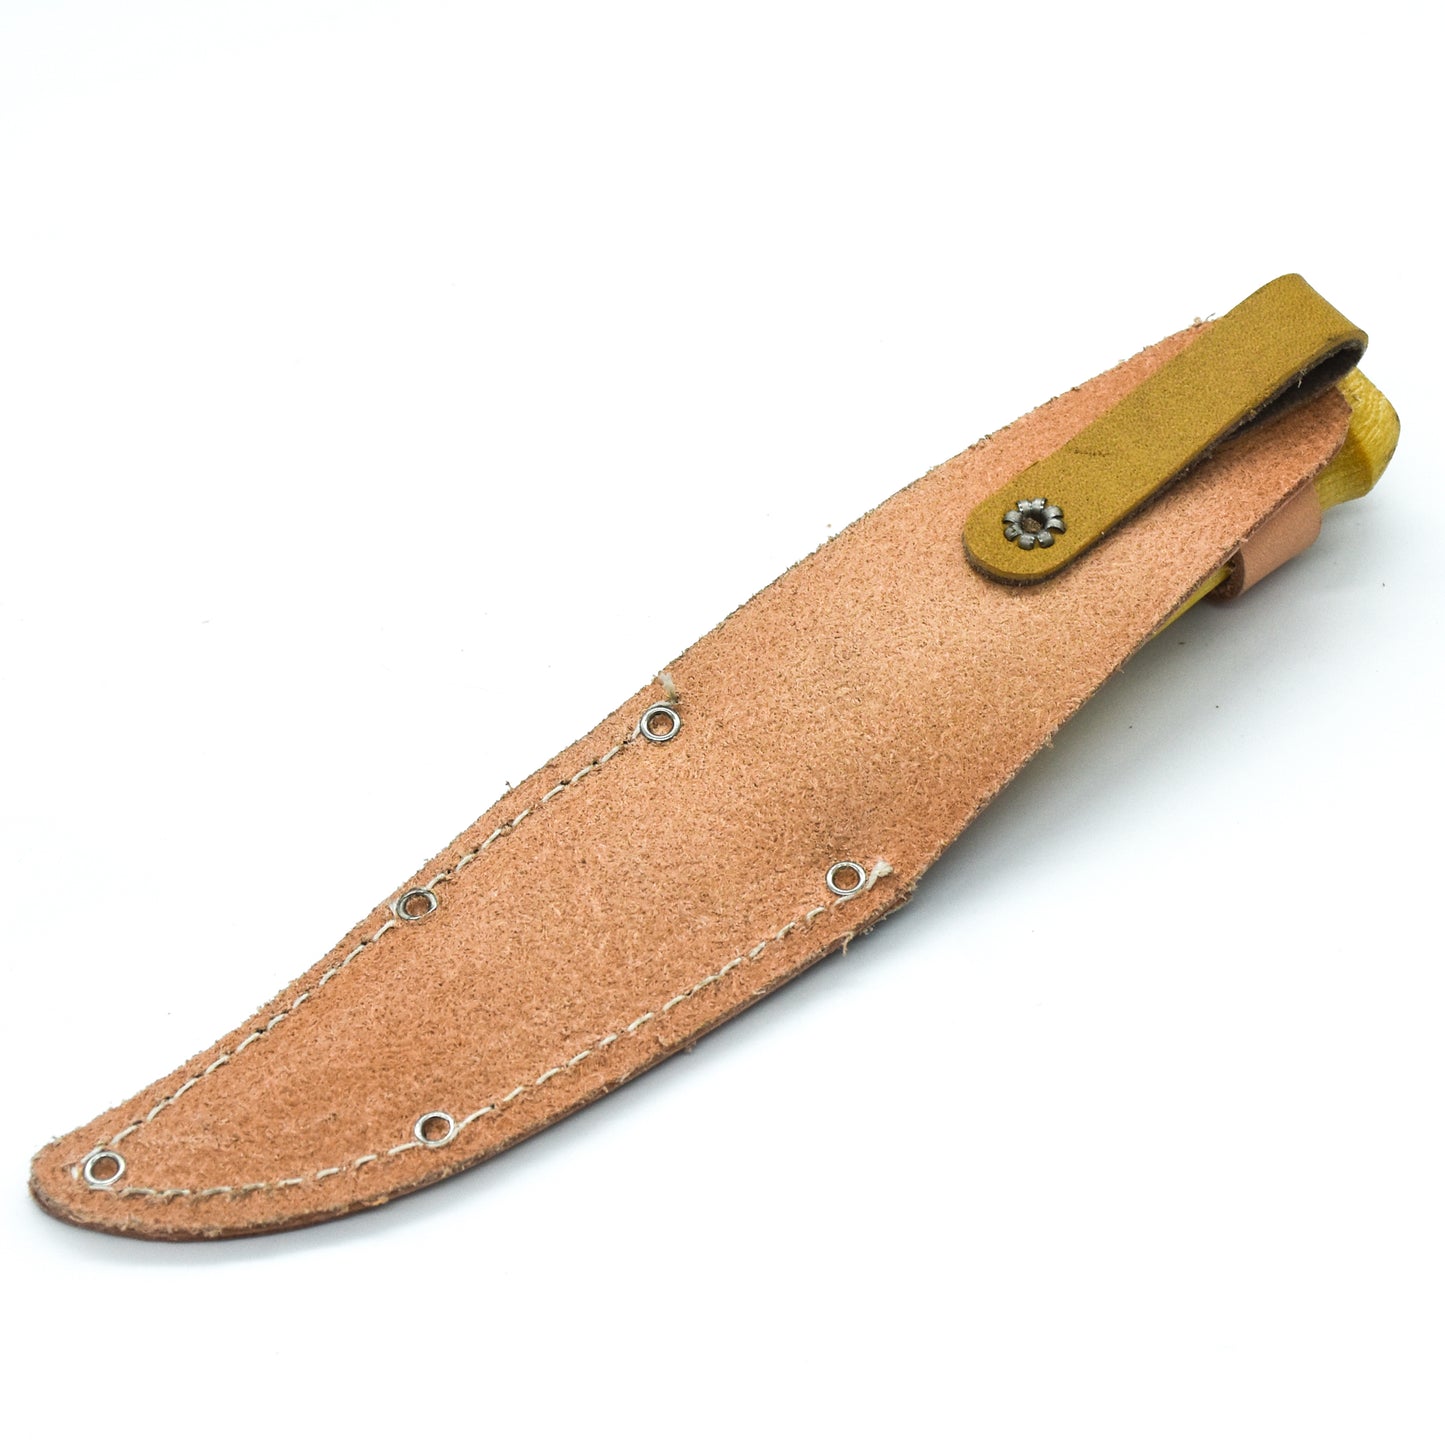 Vintage 'Scout' Wood Carving Knife - E.Jönsson